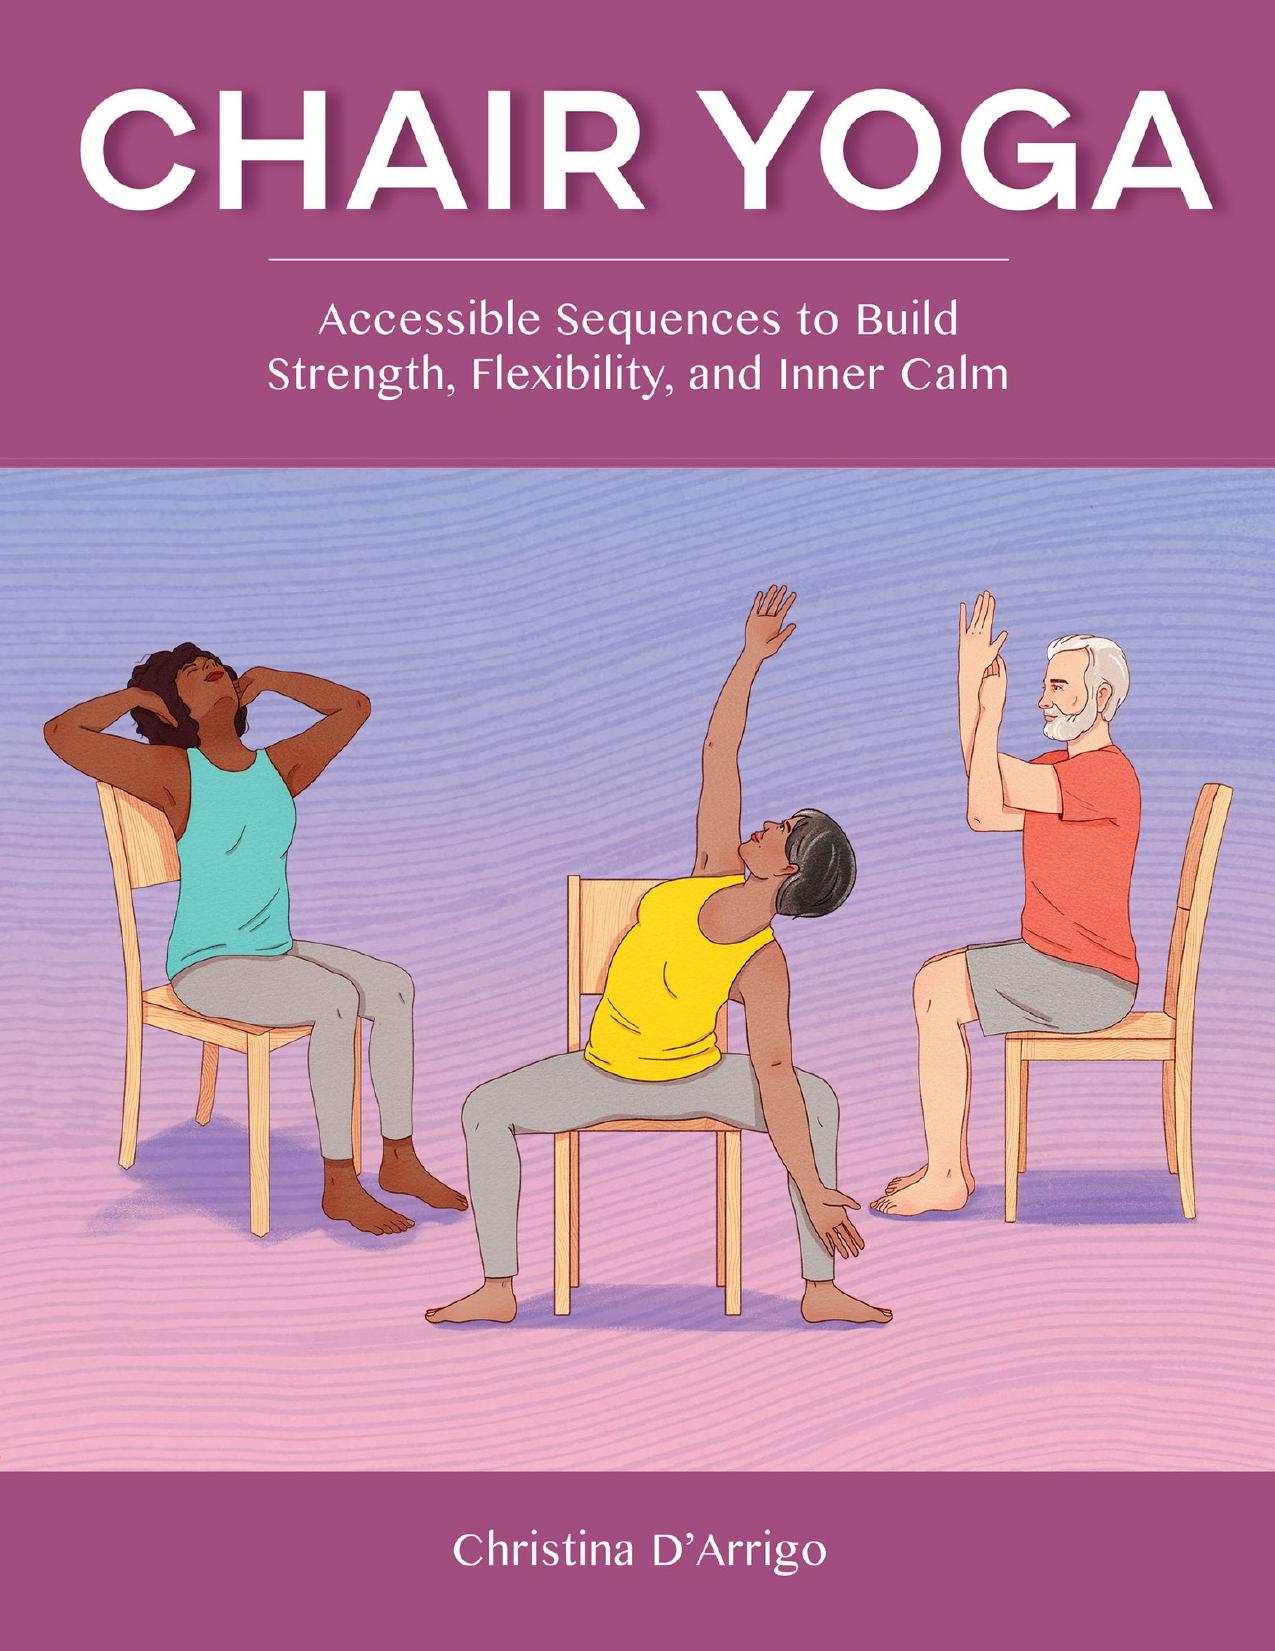 Chair Yoga: Accessible Sequences to Build Strength, Flexibility, and Inner Calm by D'Arrigo Christina